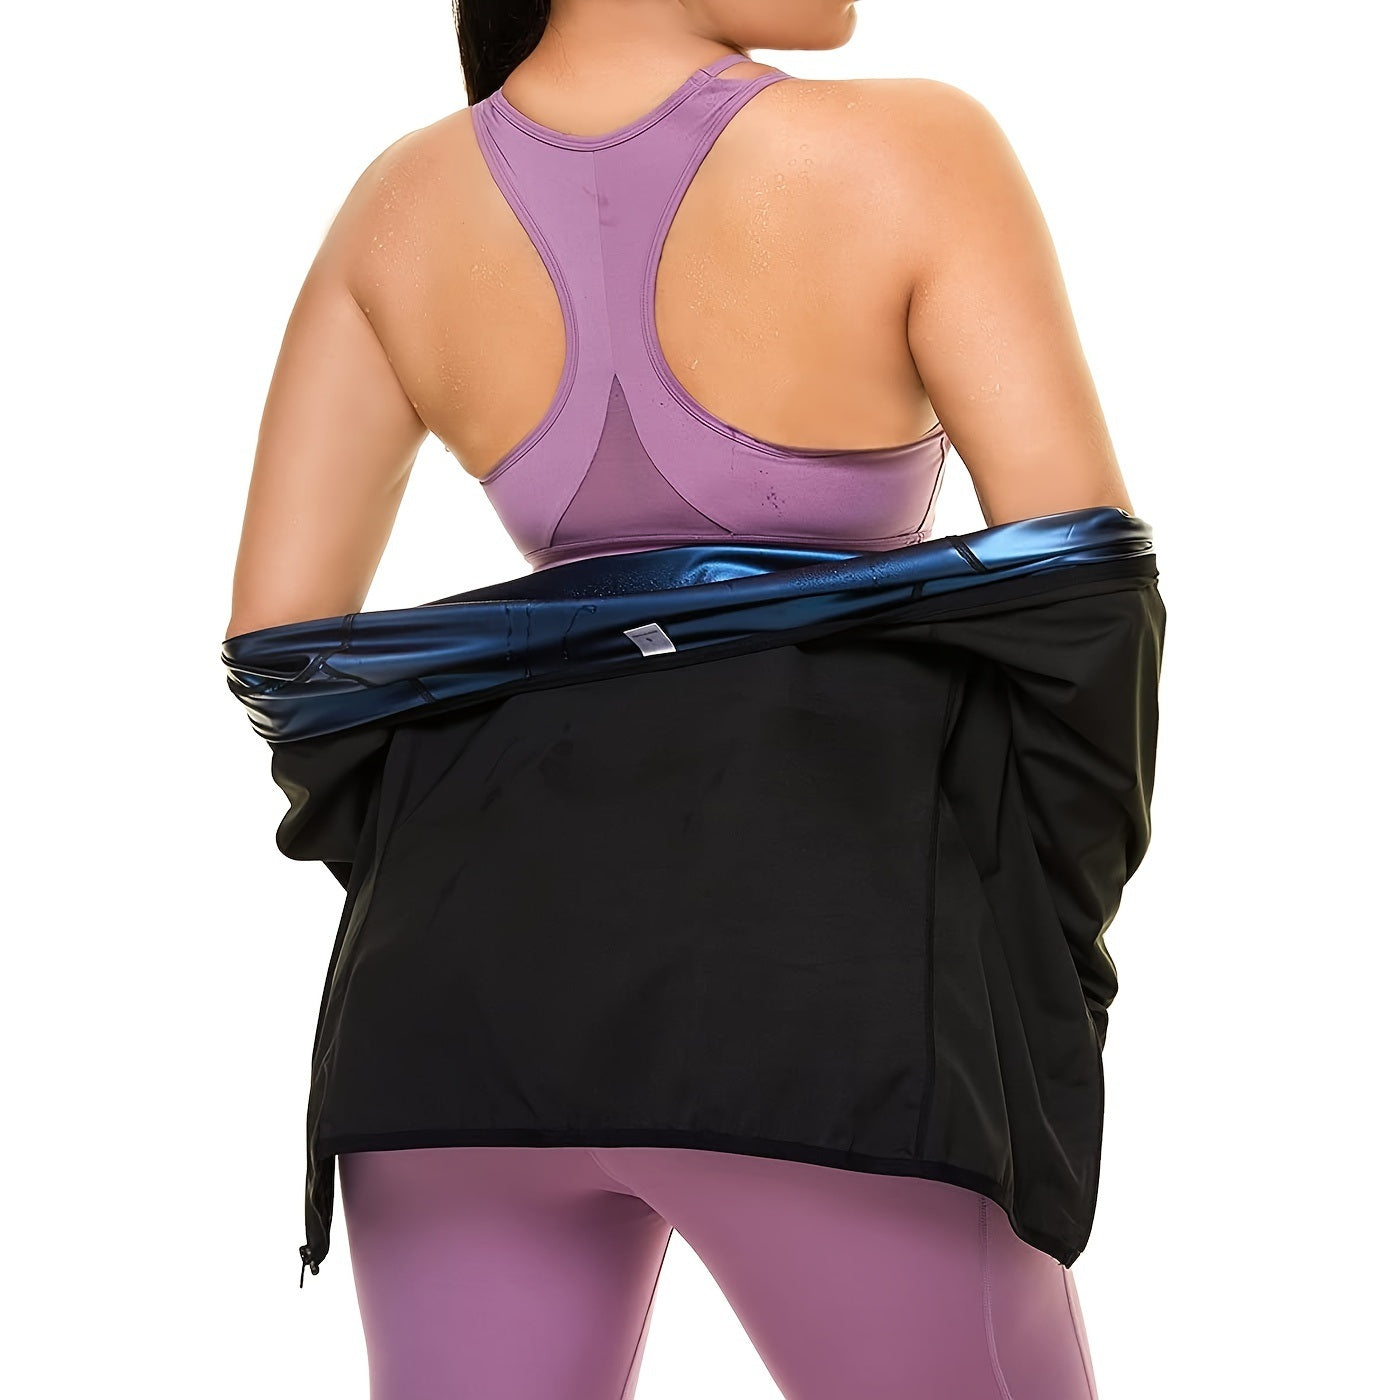 Sauna Suit For Women; Long Sleeve Sweat Suit Waist Trainer (Order A Size Up)